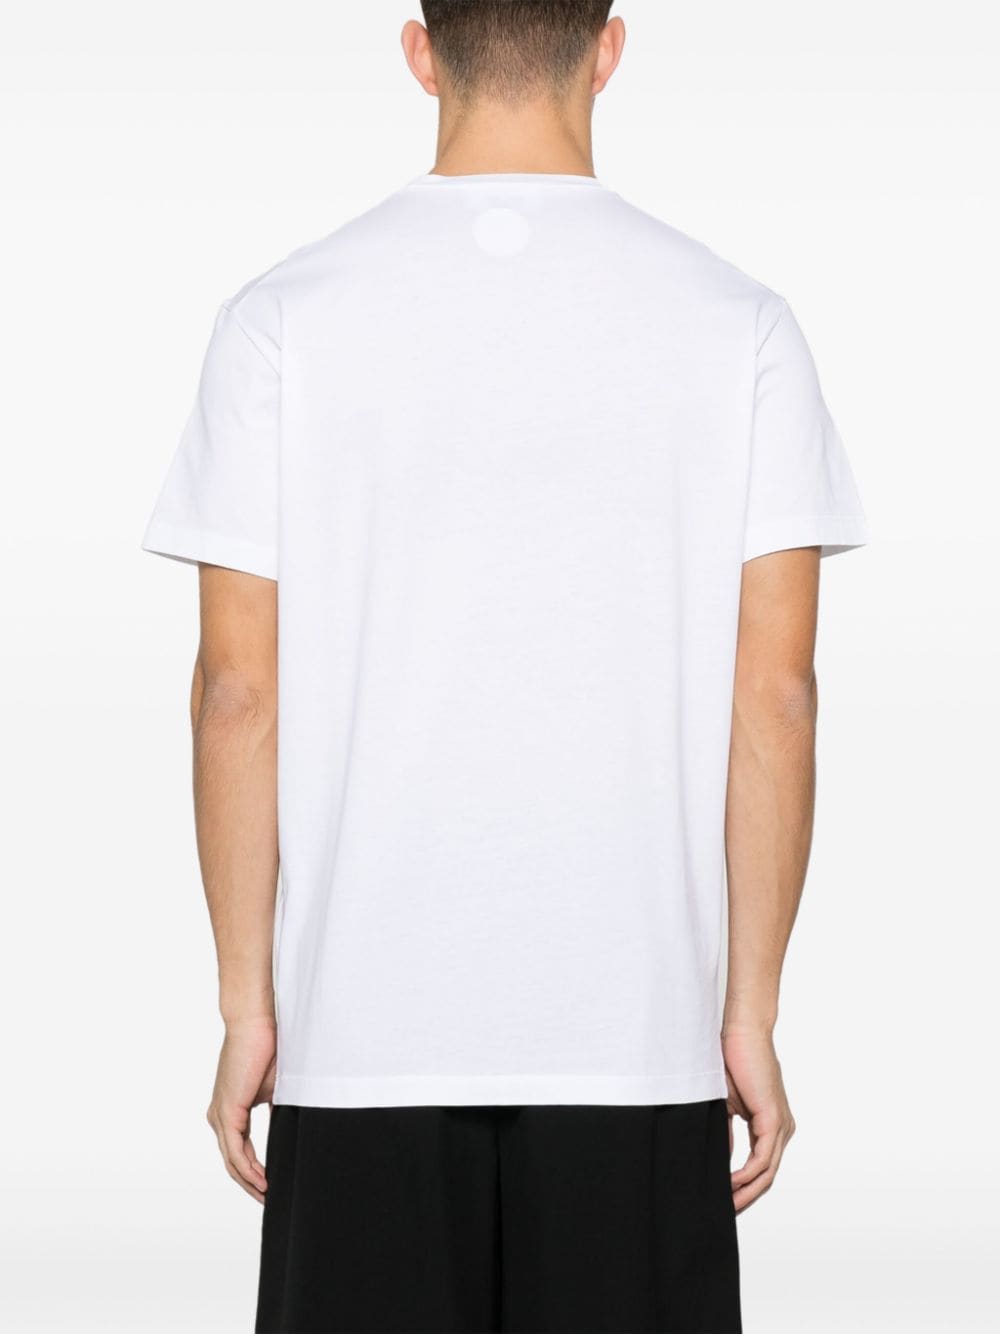 Cool Fit cotton T-shirt-6